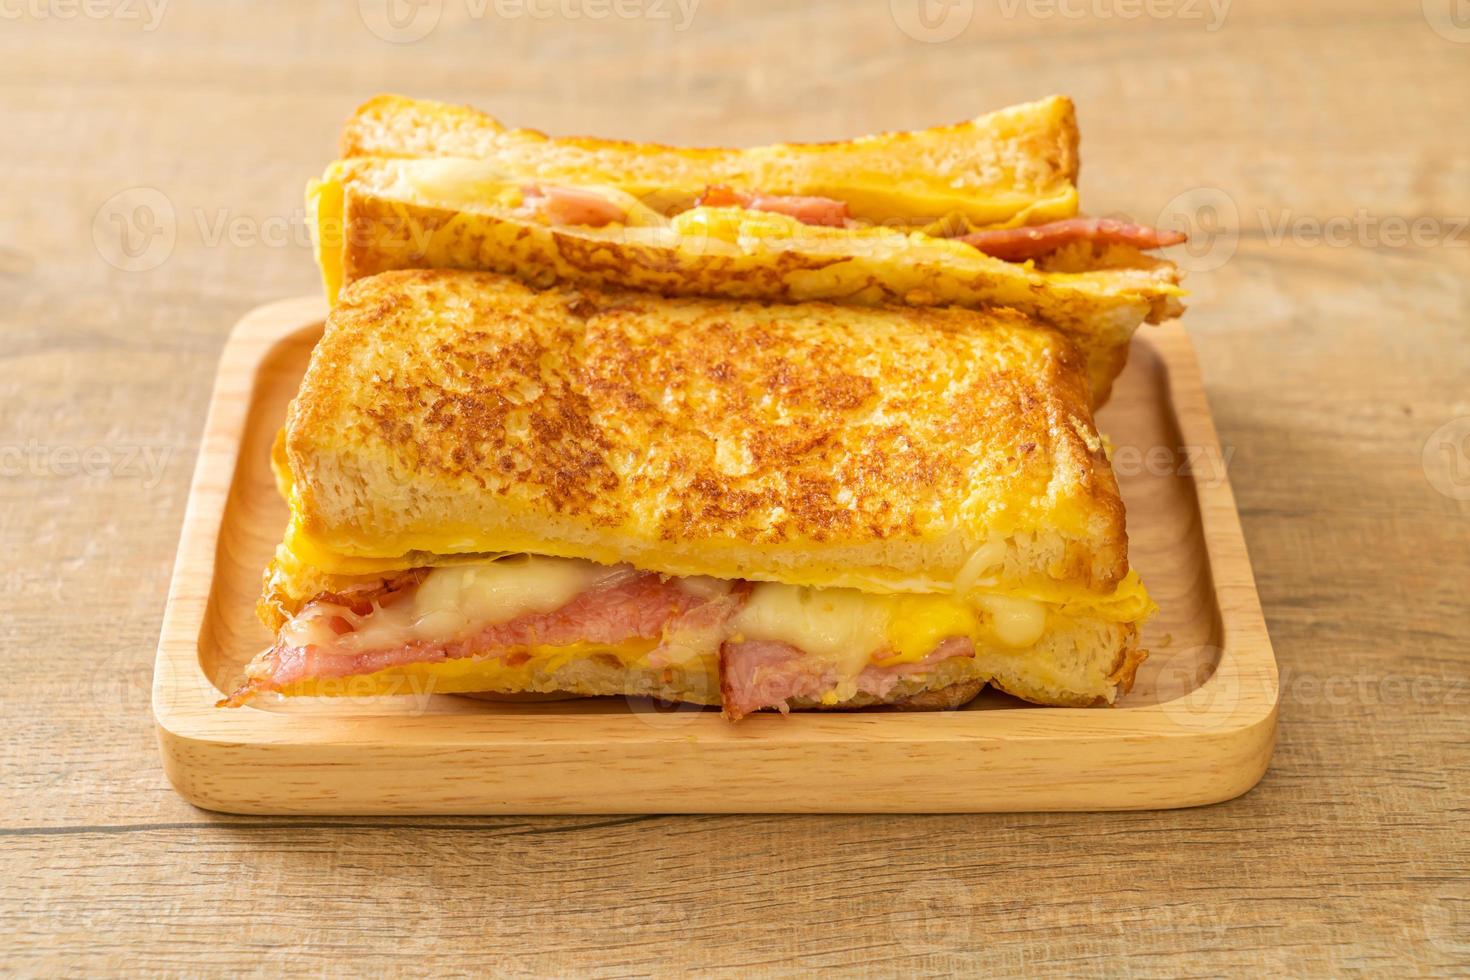 torrada francesa caseira com presunto, bacon e sanduíche de queijo com ovo foto